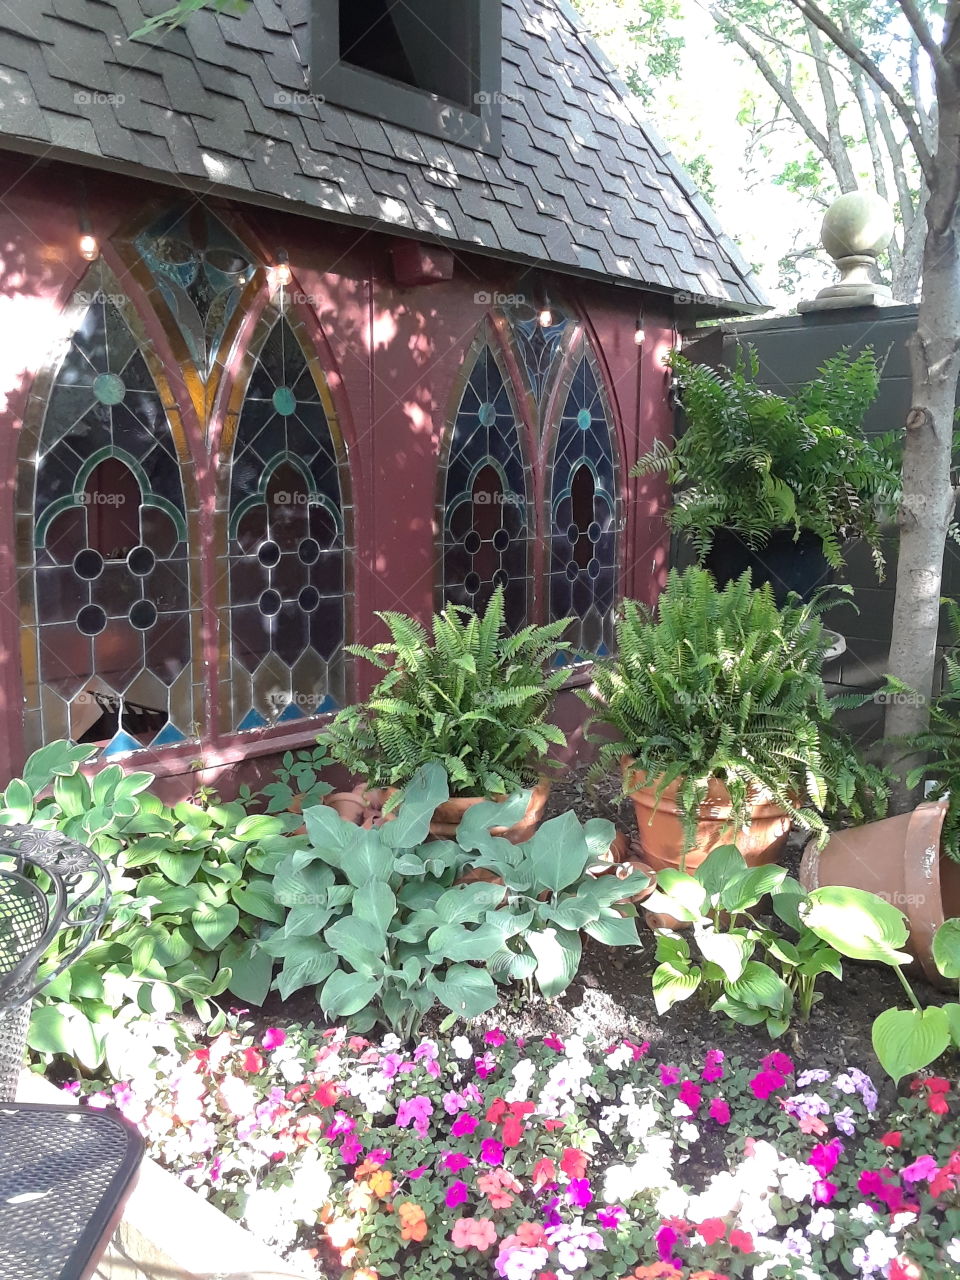 Vivilore restraurant Independence Missouri garden patio dining room chapel